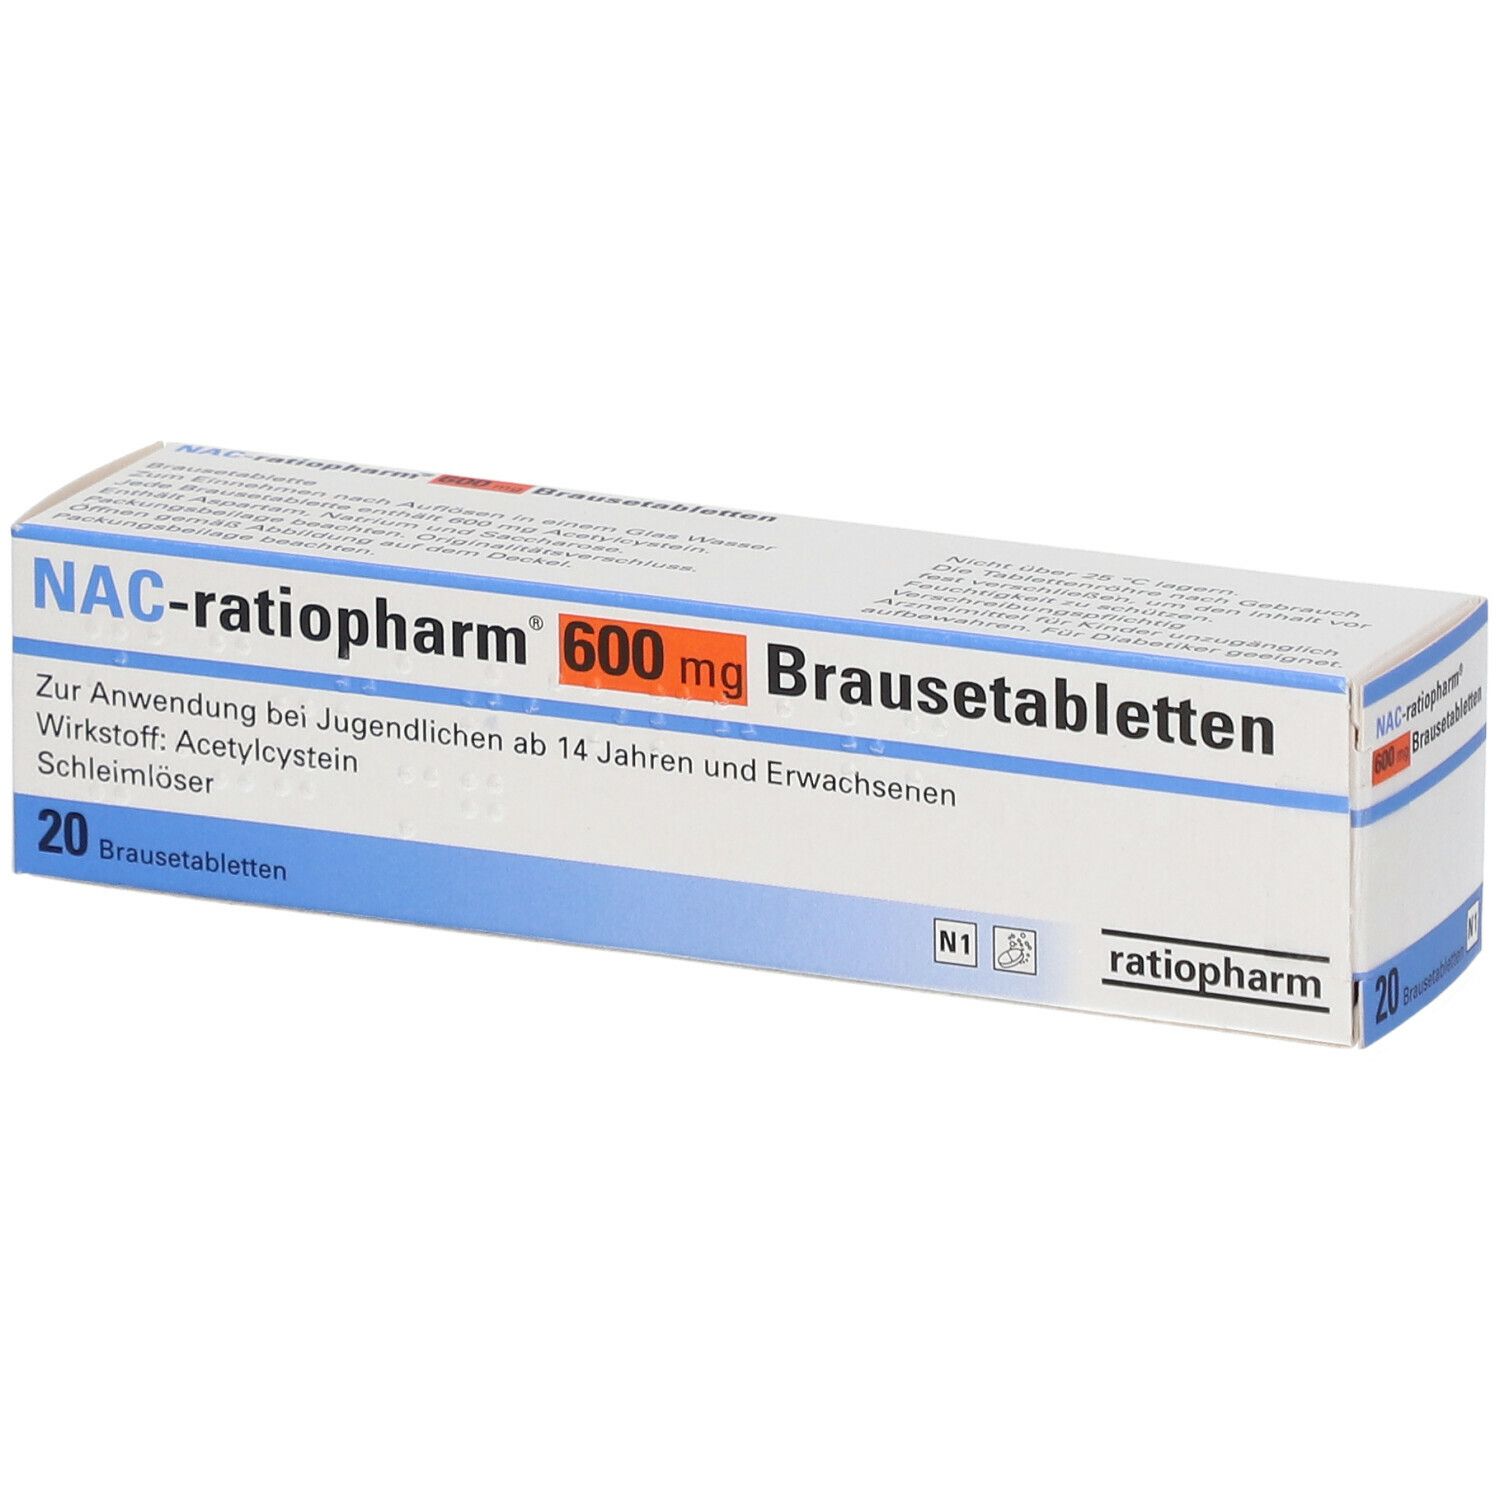 NAC-ratiopharm® 600 mg